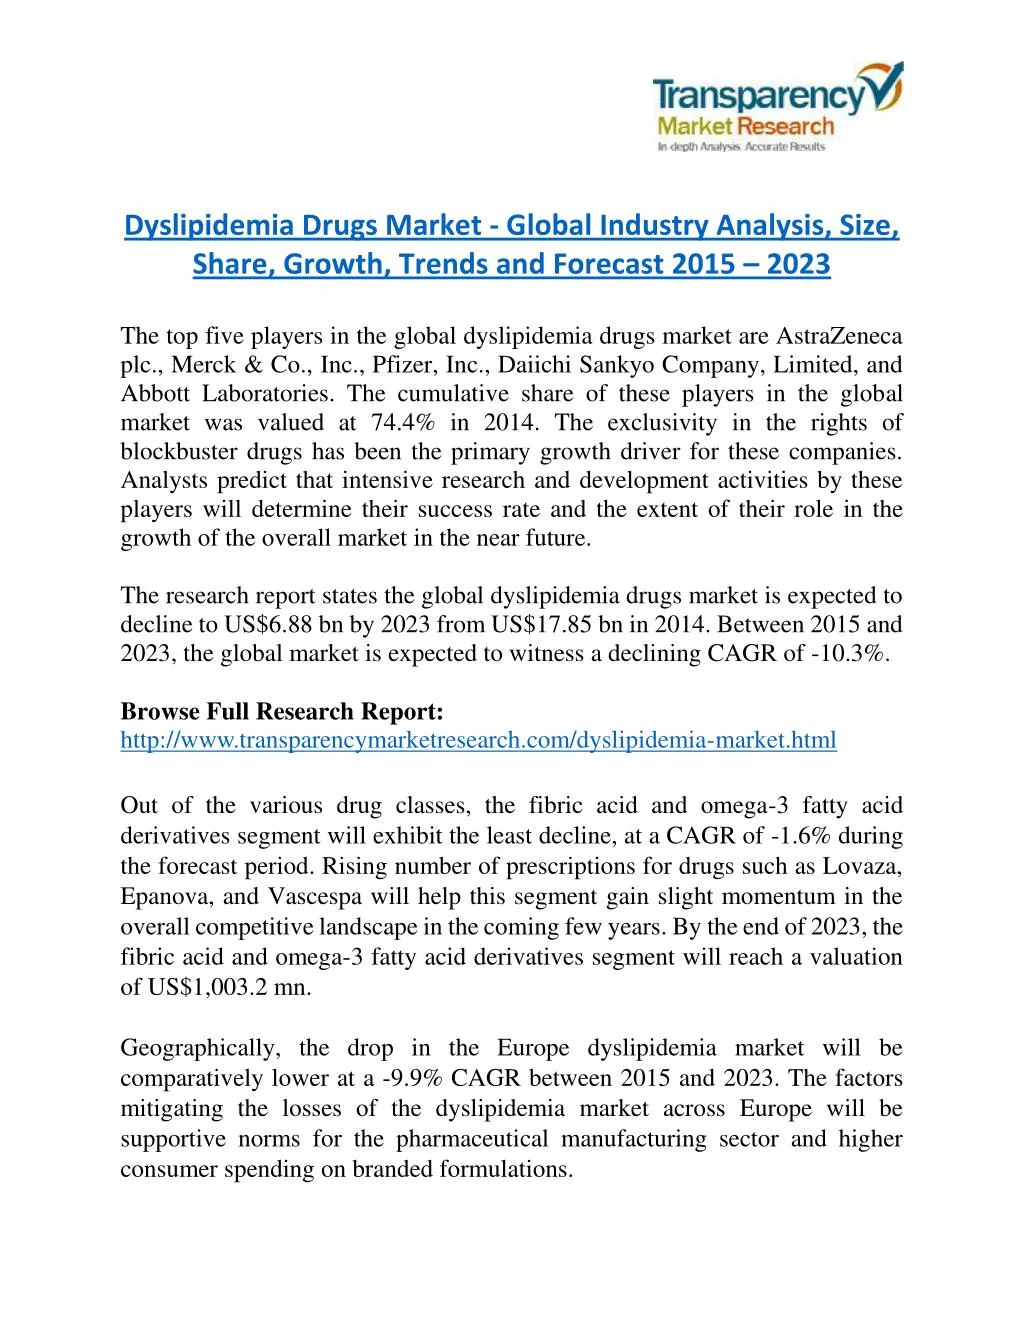 dyslipidemia drugs market global industry